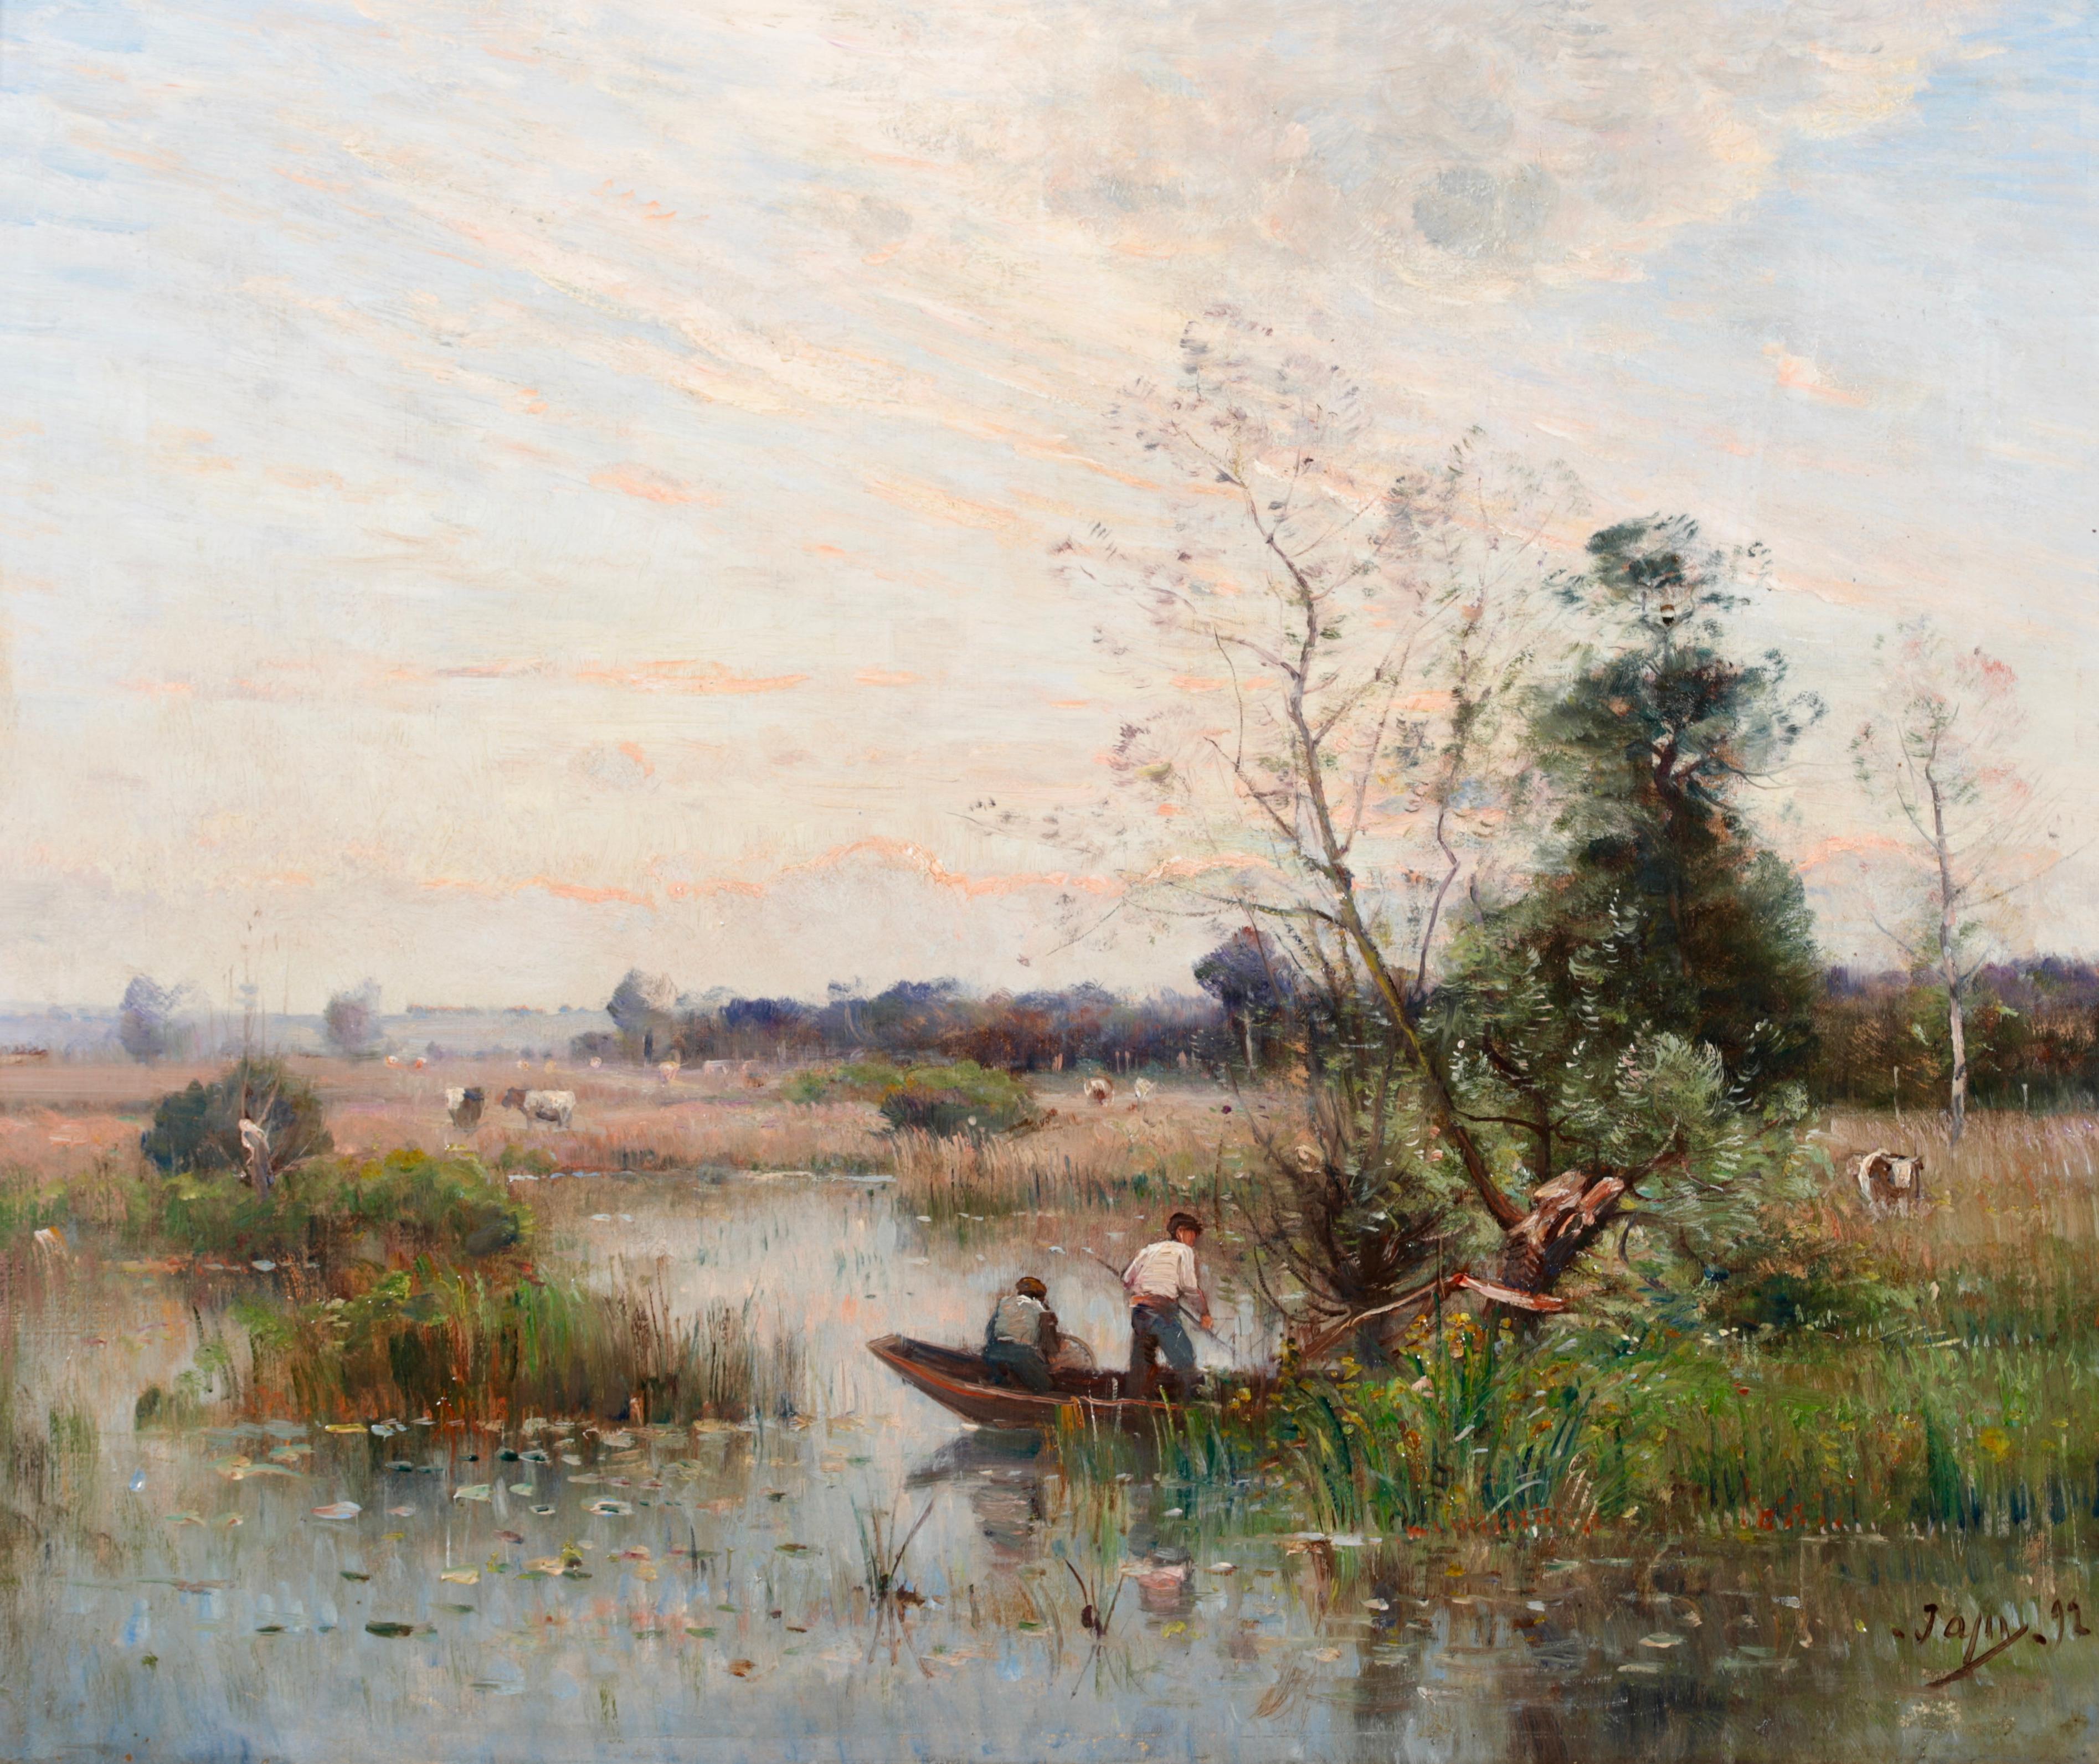 Louis Aimé Japy Landscape Painting – Fishing on a River - Impressionistisches Ölgemälde, Boot auf Fluss Landschaft von Louis Japy